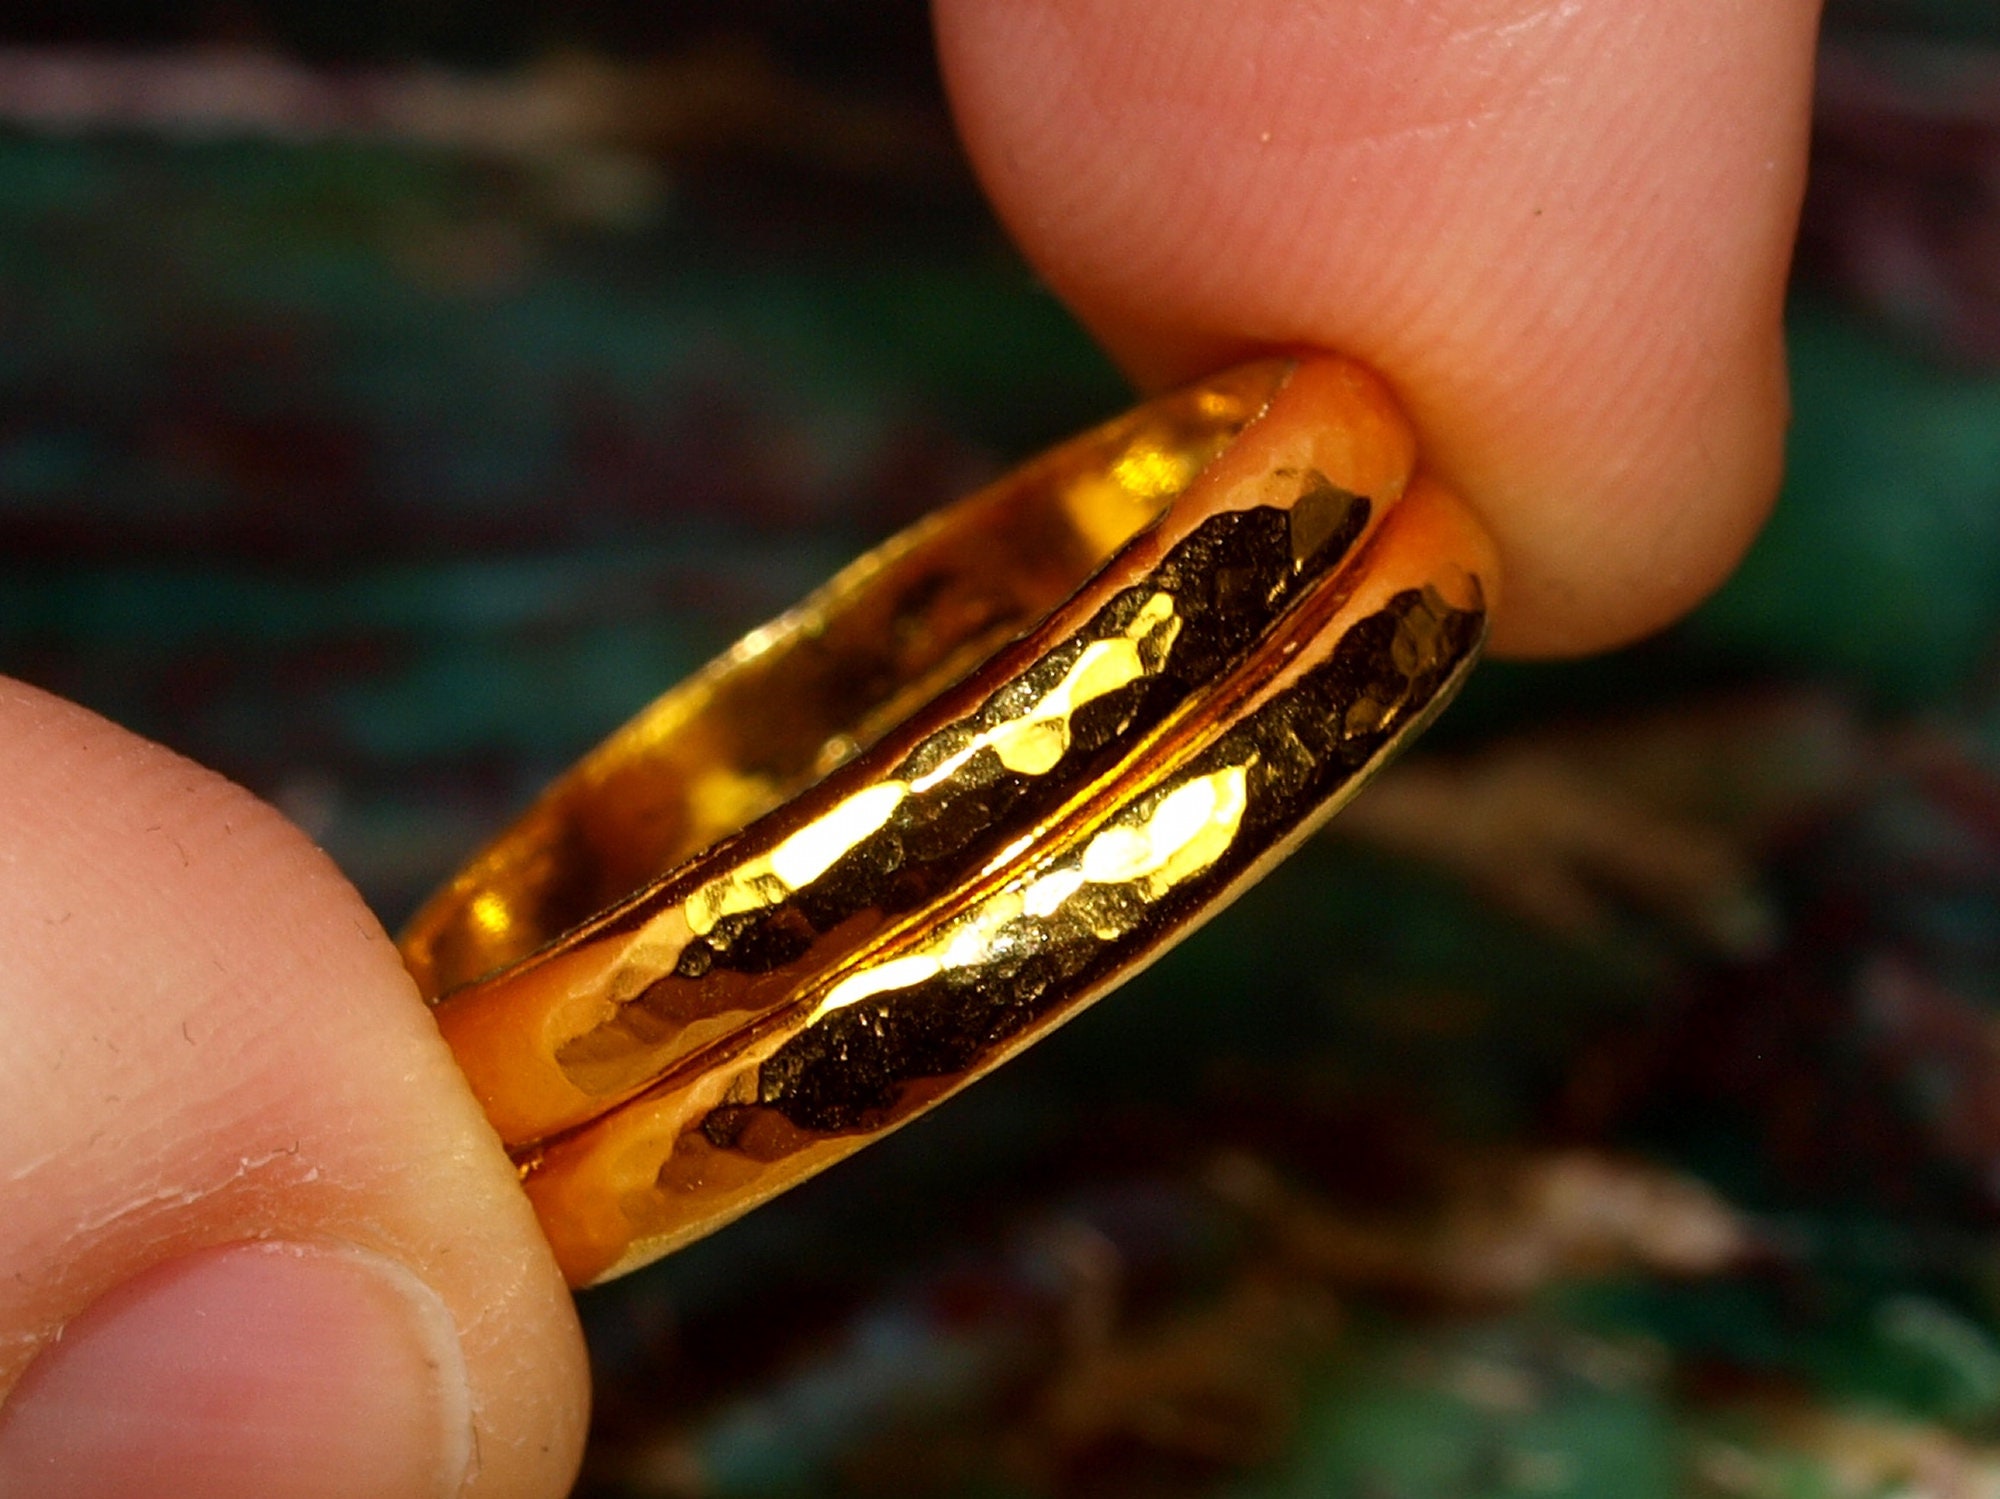 999.9 (24k) Pure Gold Shiny Band Ring 5.88 Grams. Size 7.25 | eBay